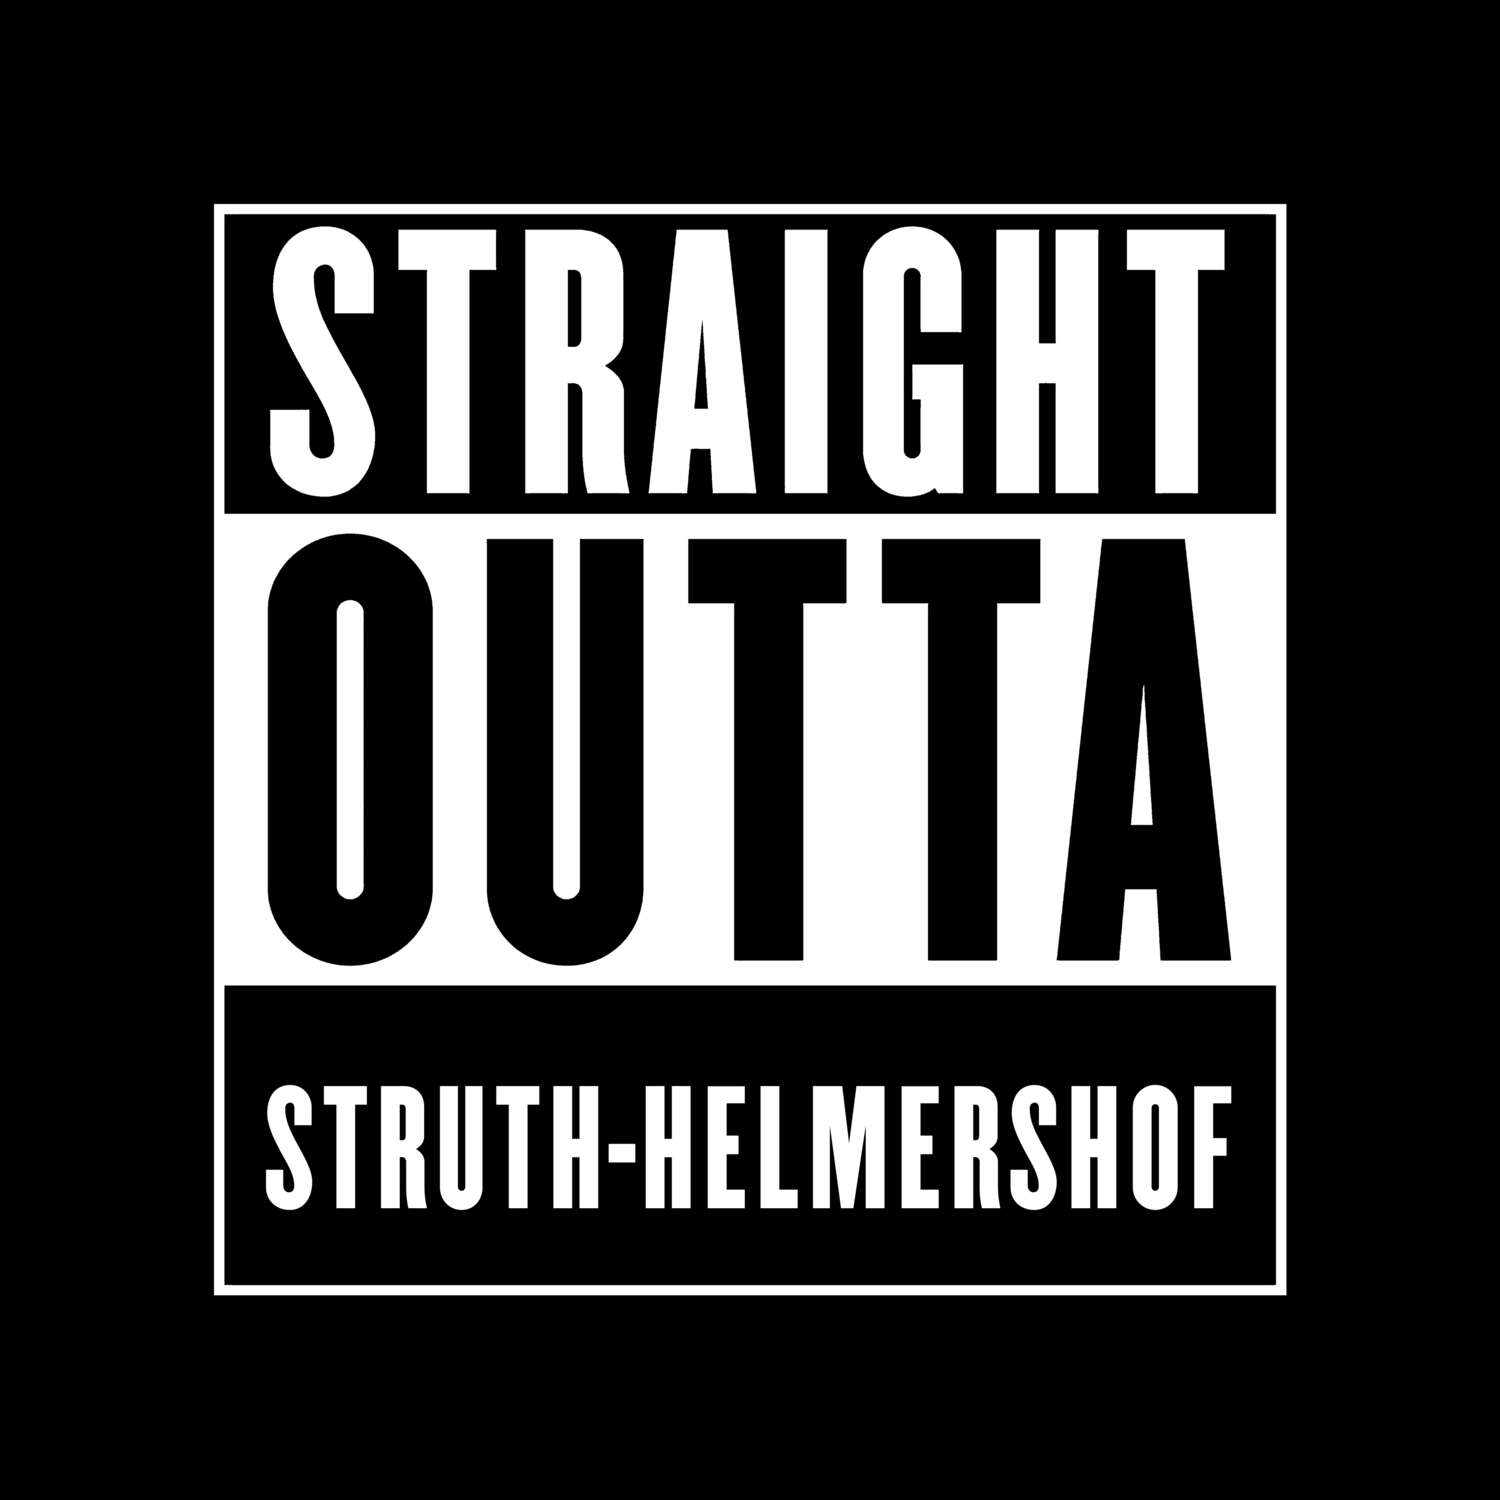 Struth-Helmershof T-Shirt »Straight Outta«